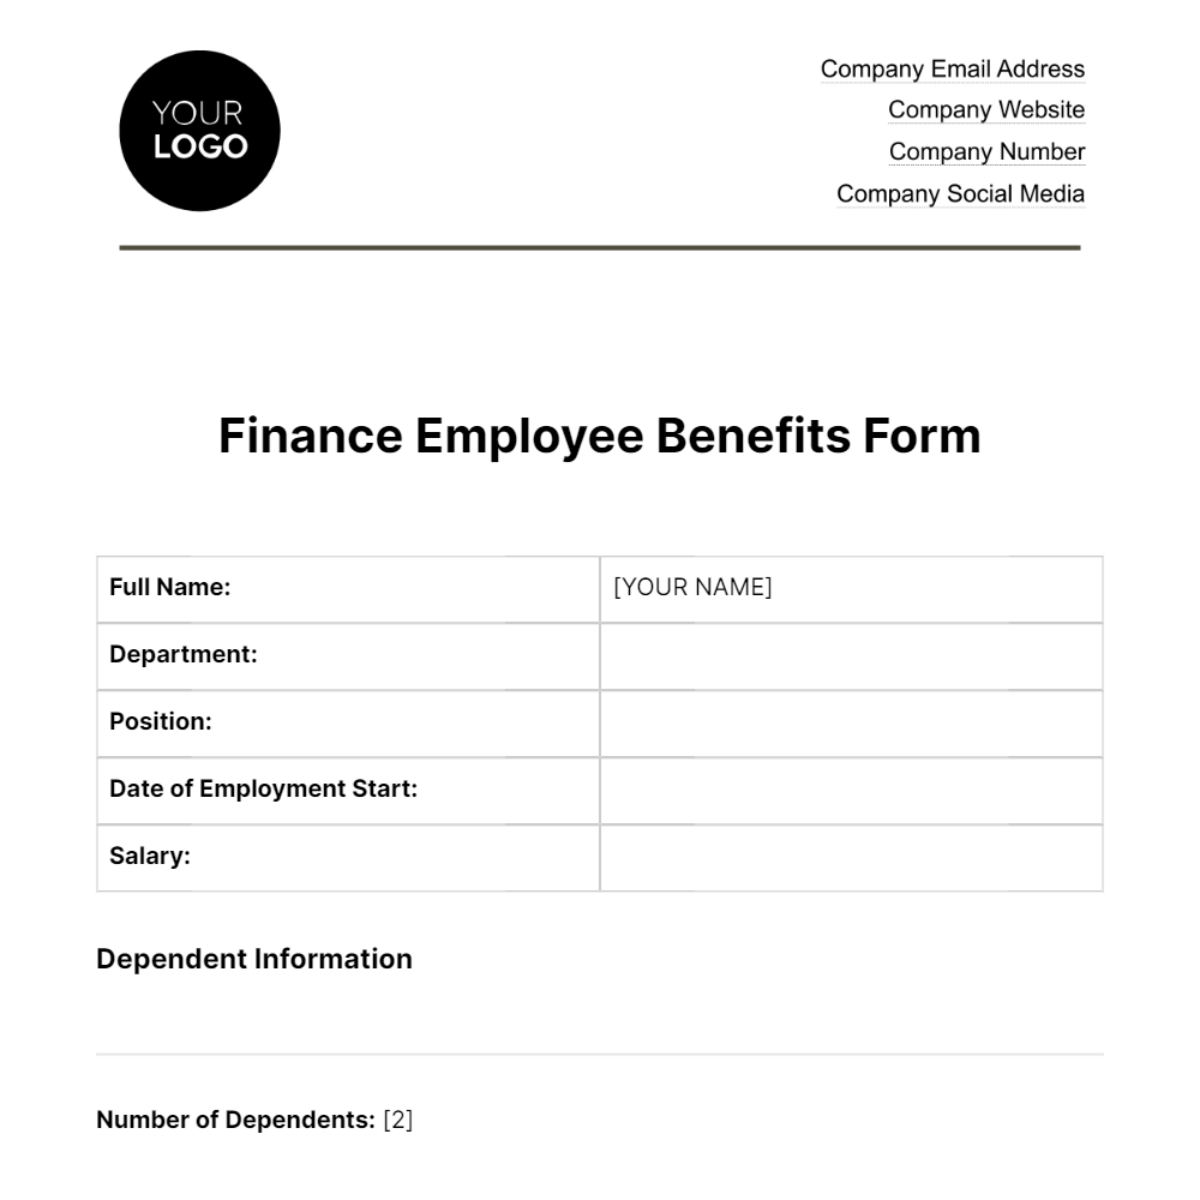 Finance Employee Benefits Form Template